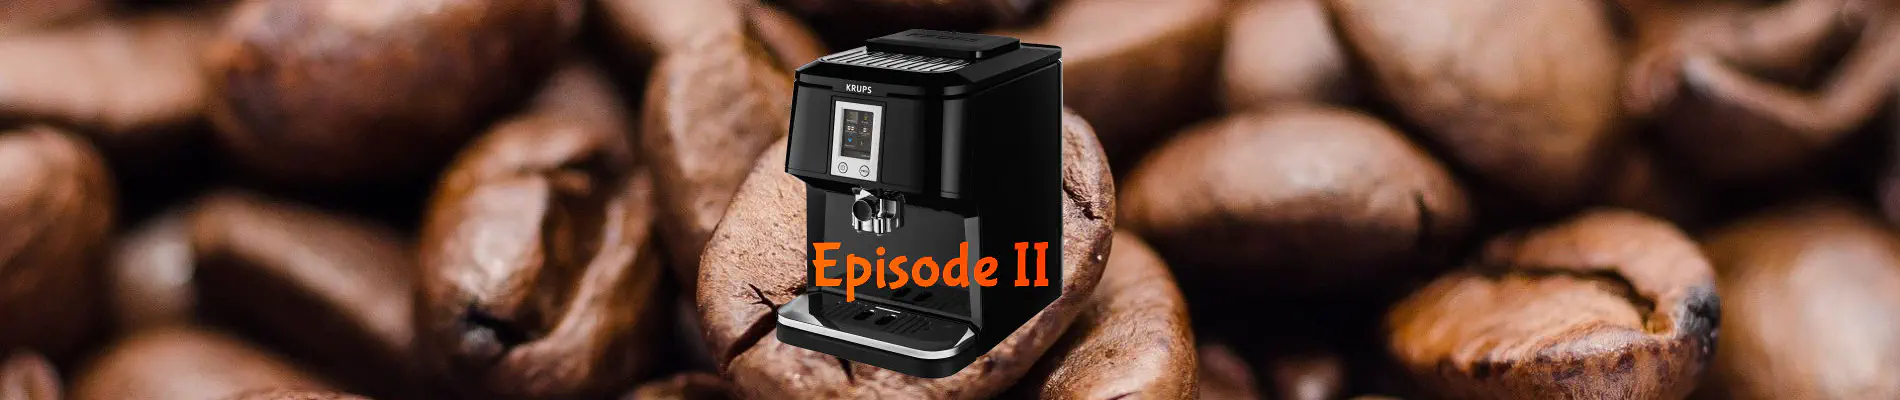 Repairing bean to cup Krups EA8800 coffee machine - Episode II